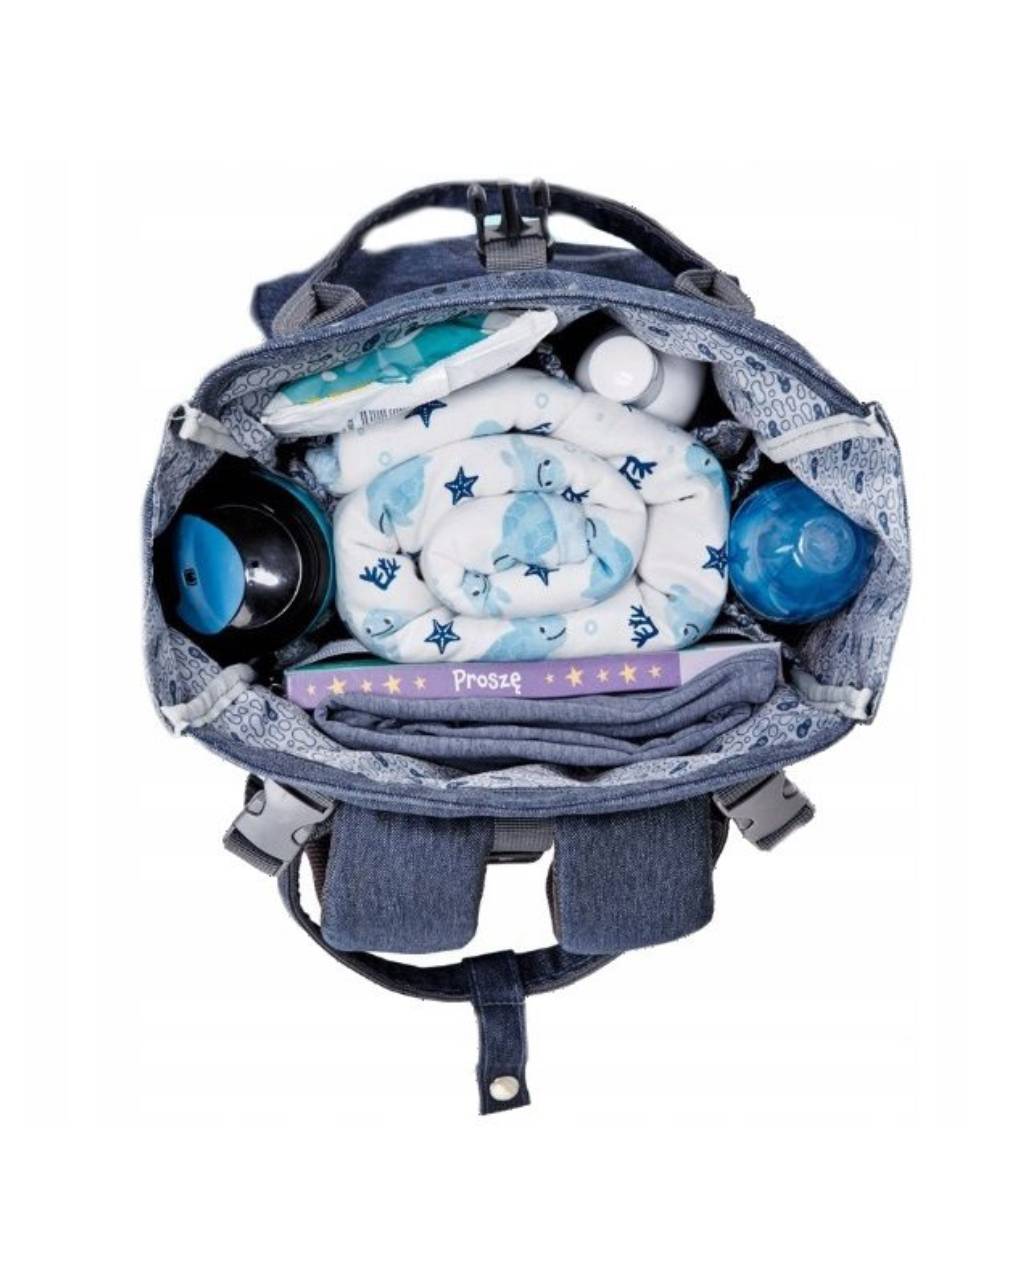 Kinderkraft τσάντα αλλαξιέρα backpack moonpack confetti dem - Kinderkraft